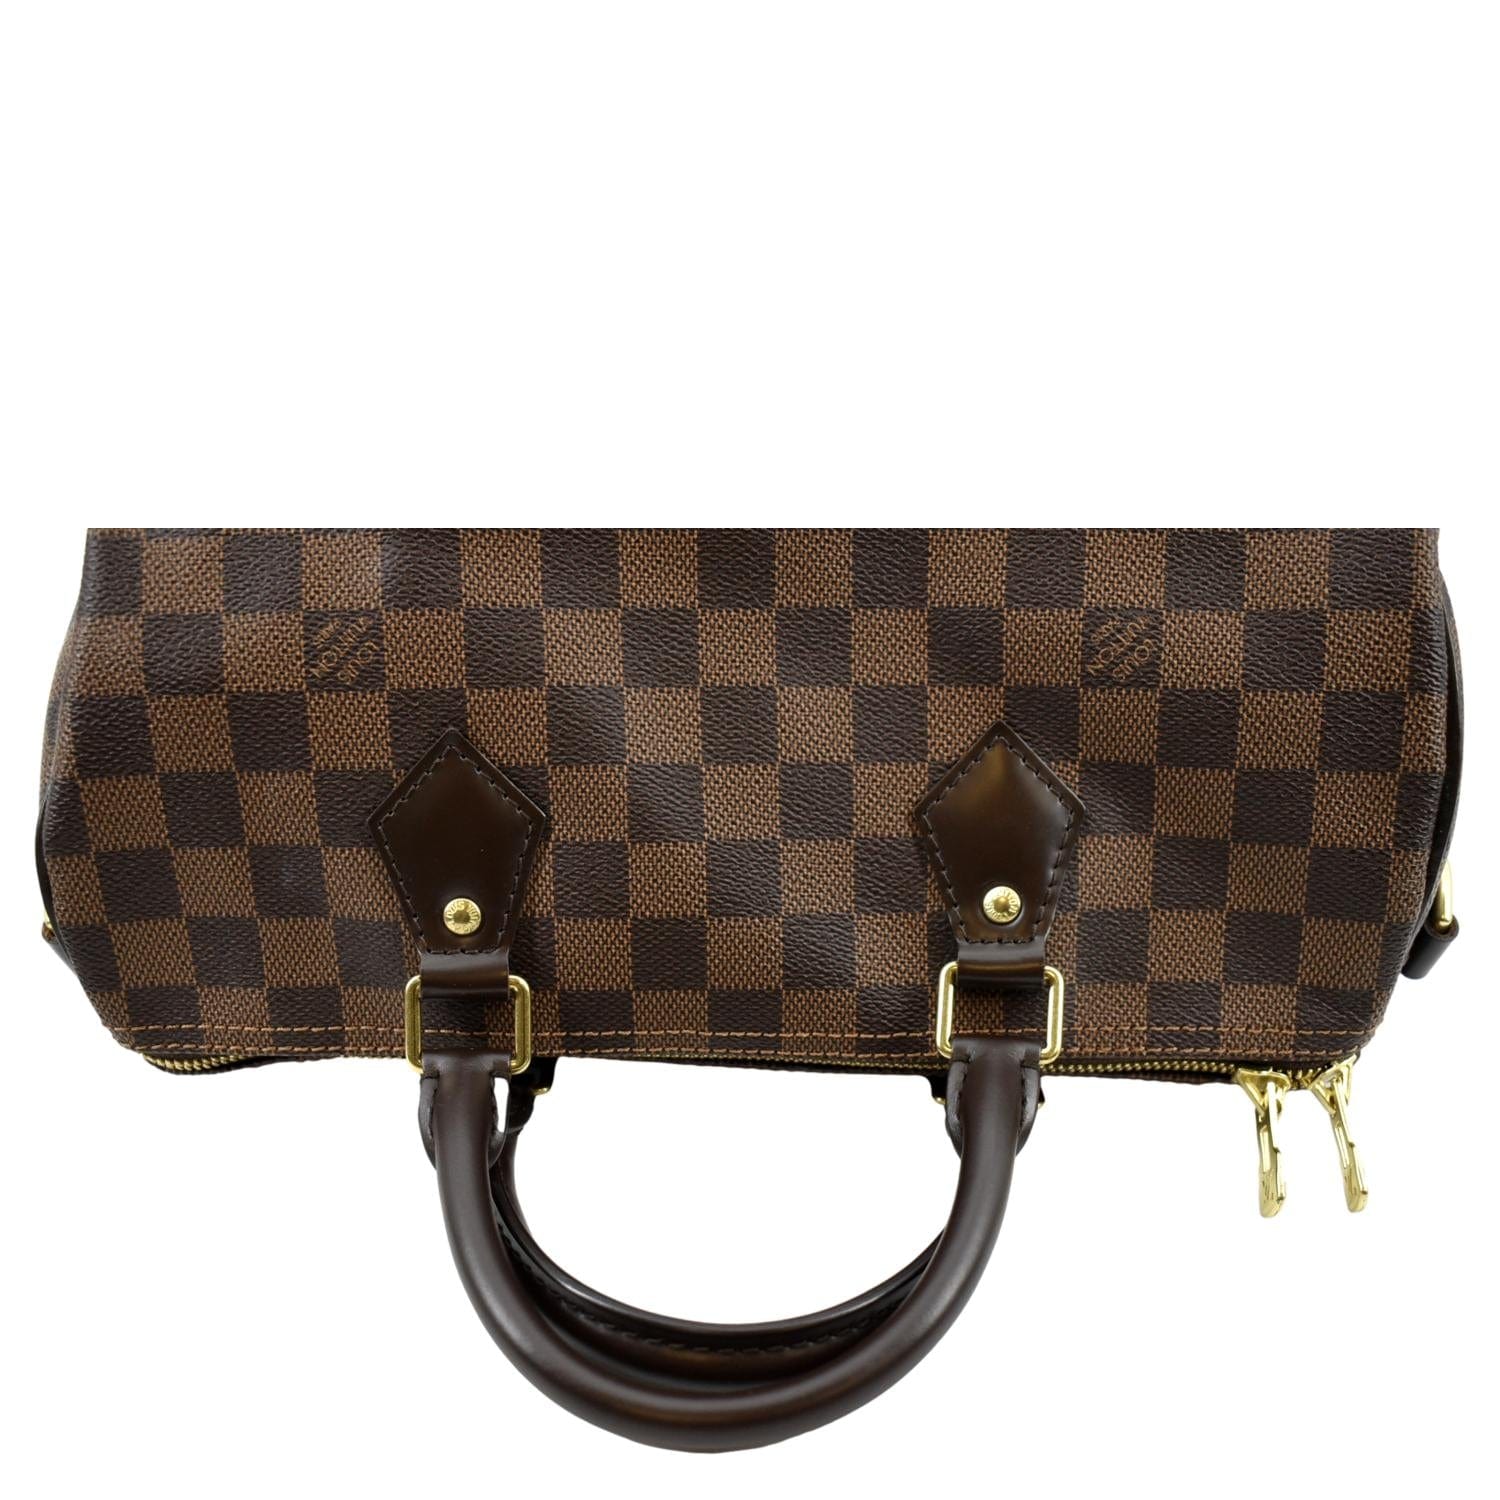 Louis Vuitton Speedy Bandouliere Bag Damier 30 Brown